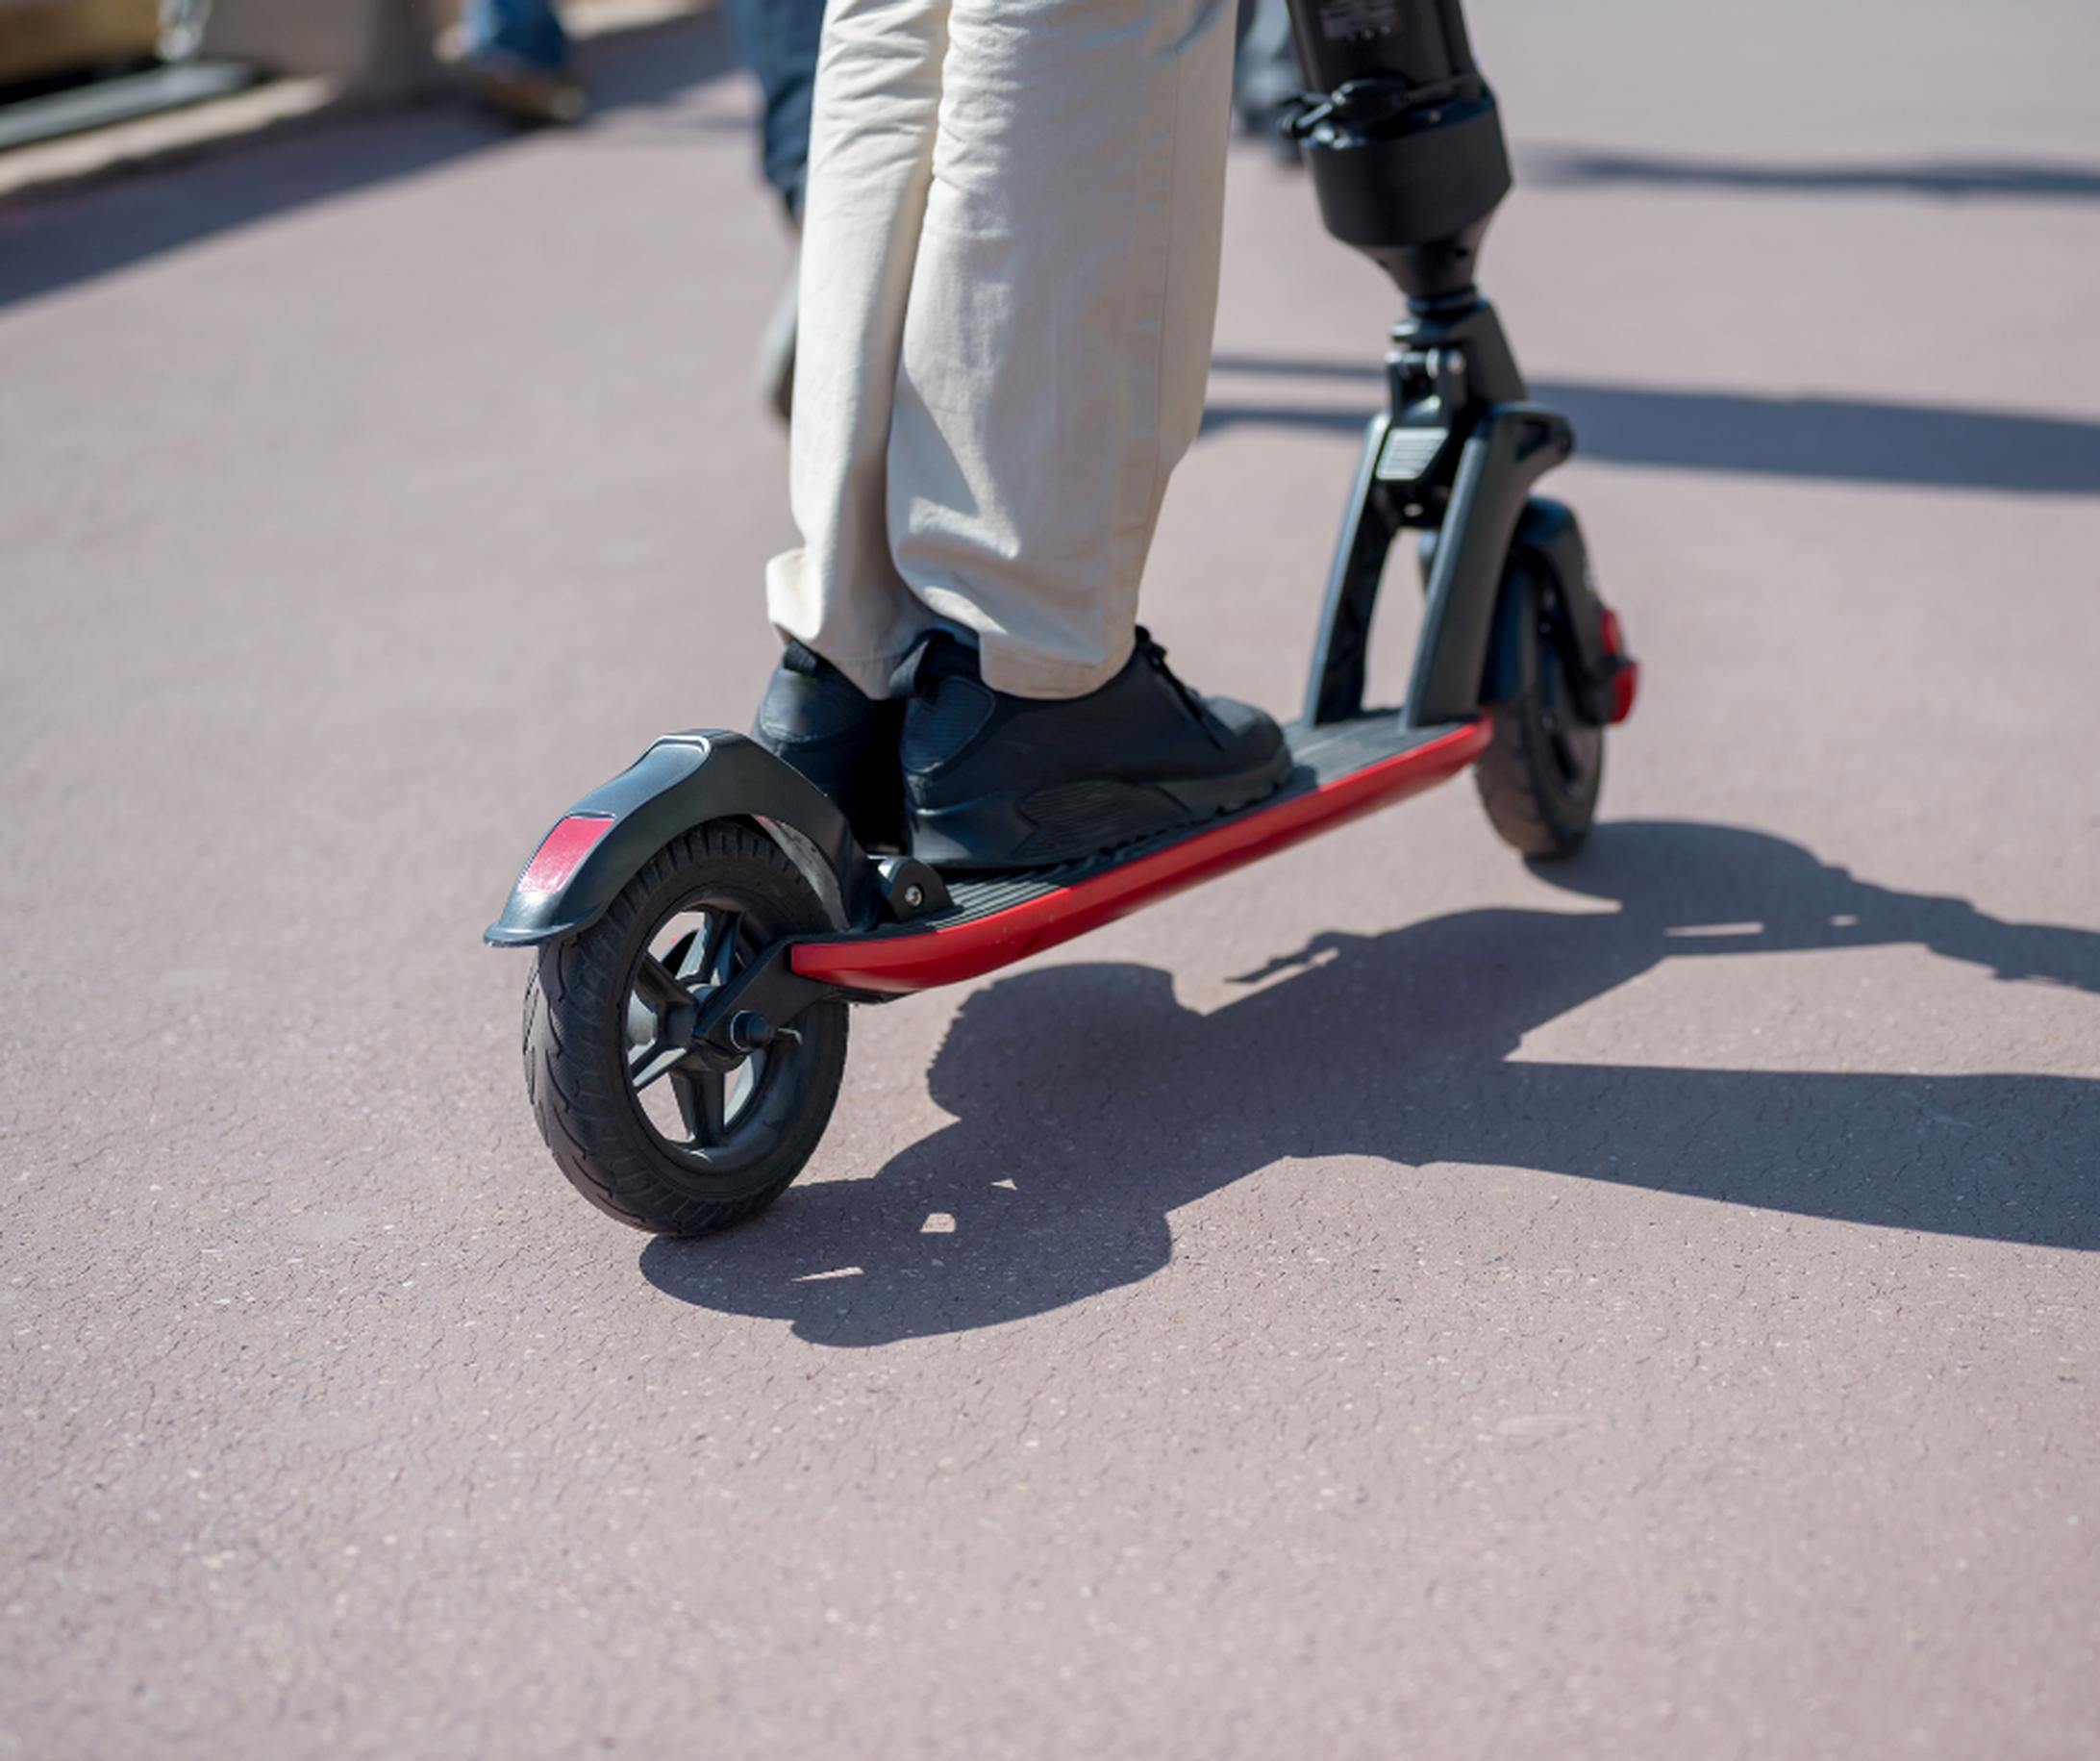 Paris has banned e-scooters